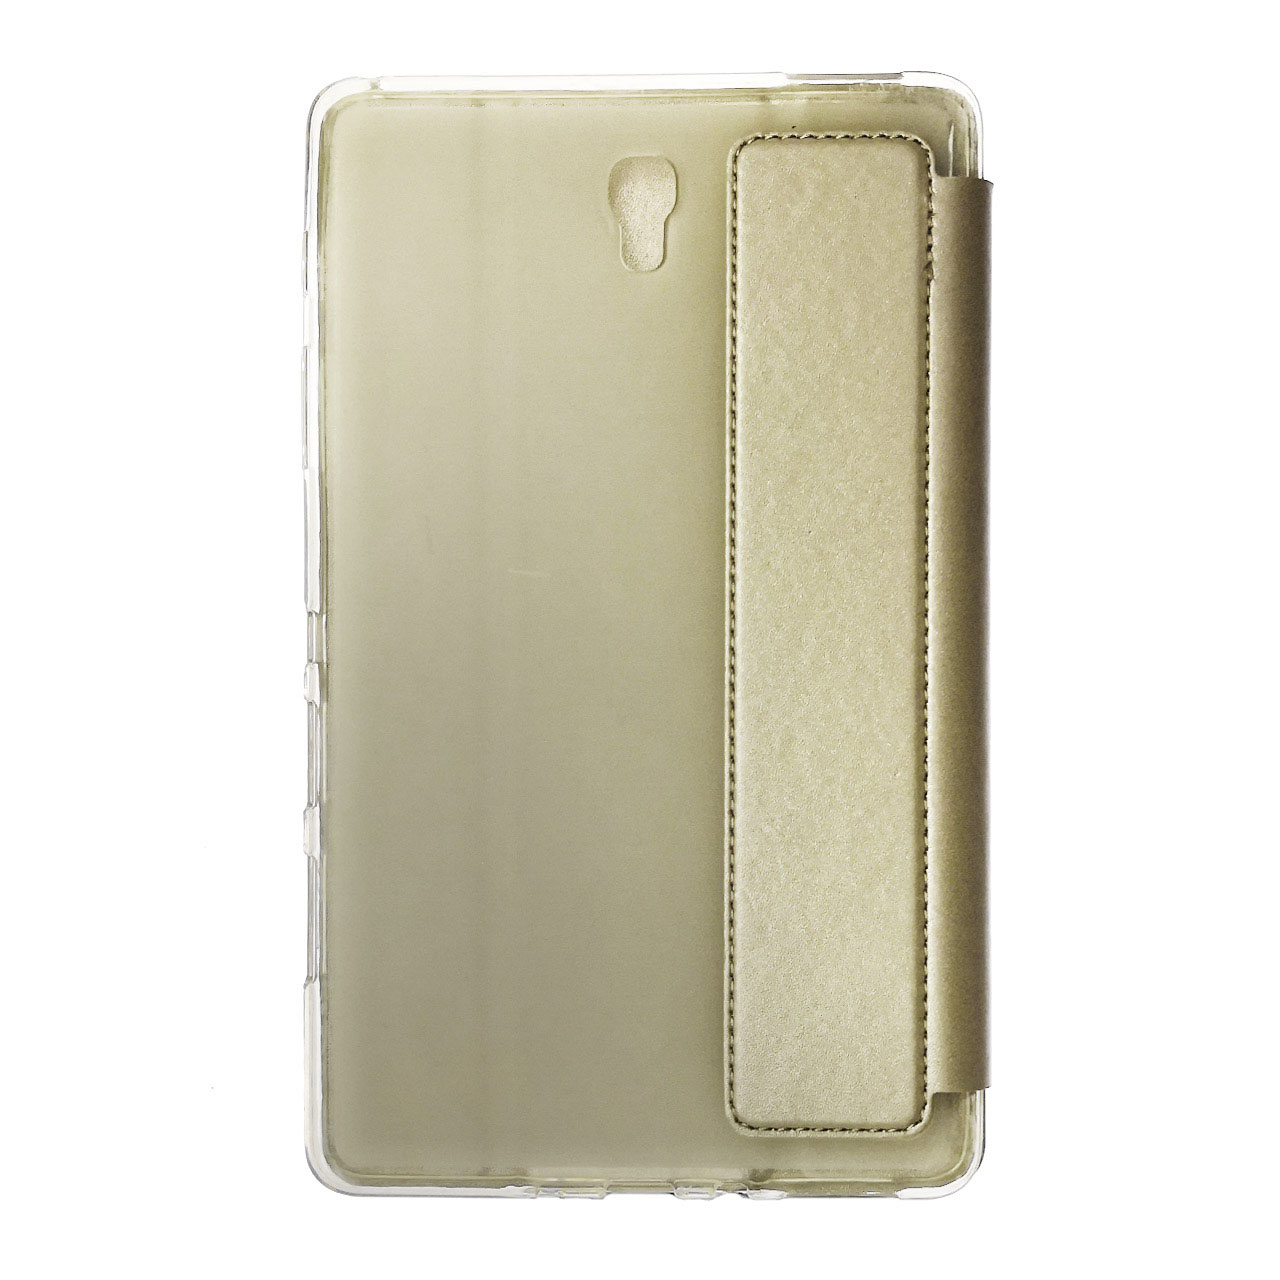 Чехол книжка Smart Case для SAMSUNG Galaxy Tab S 8.4 (SM-T700), экокожа, цвет бежевый